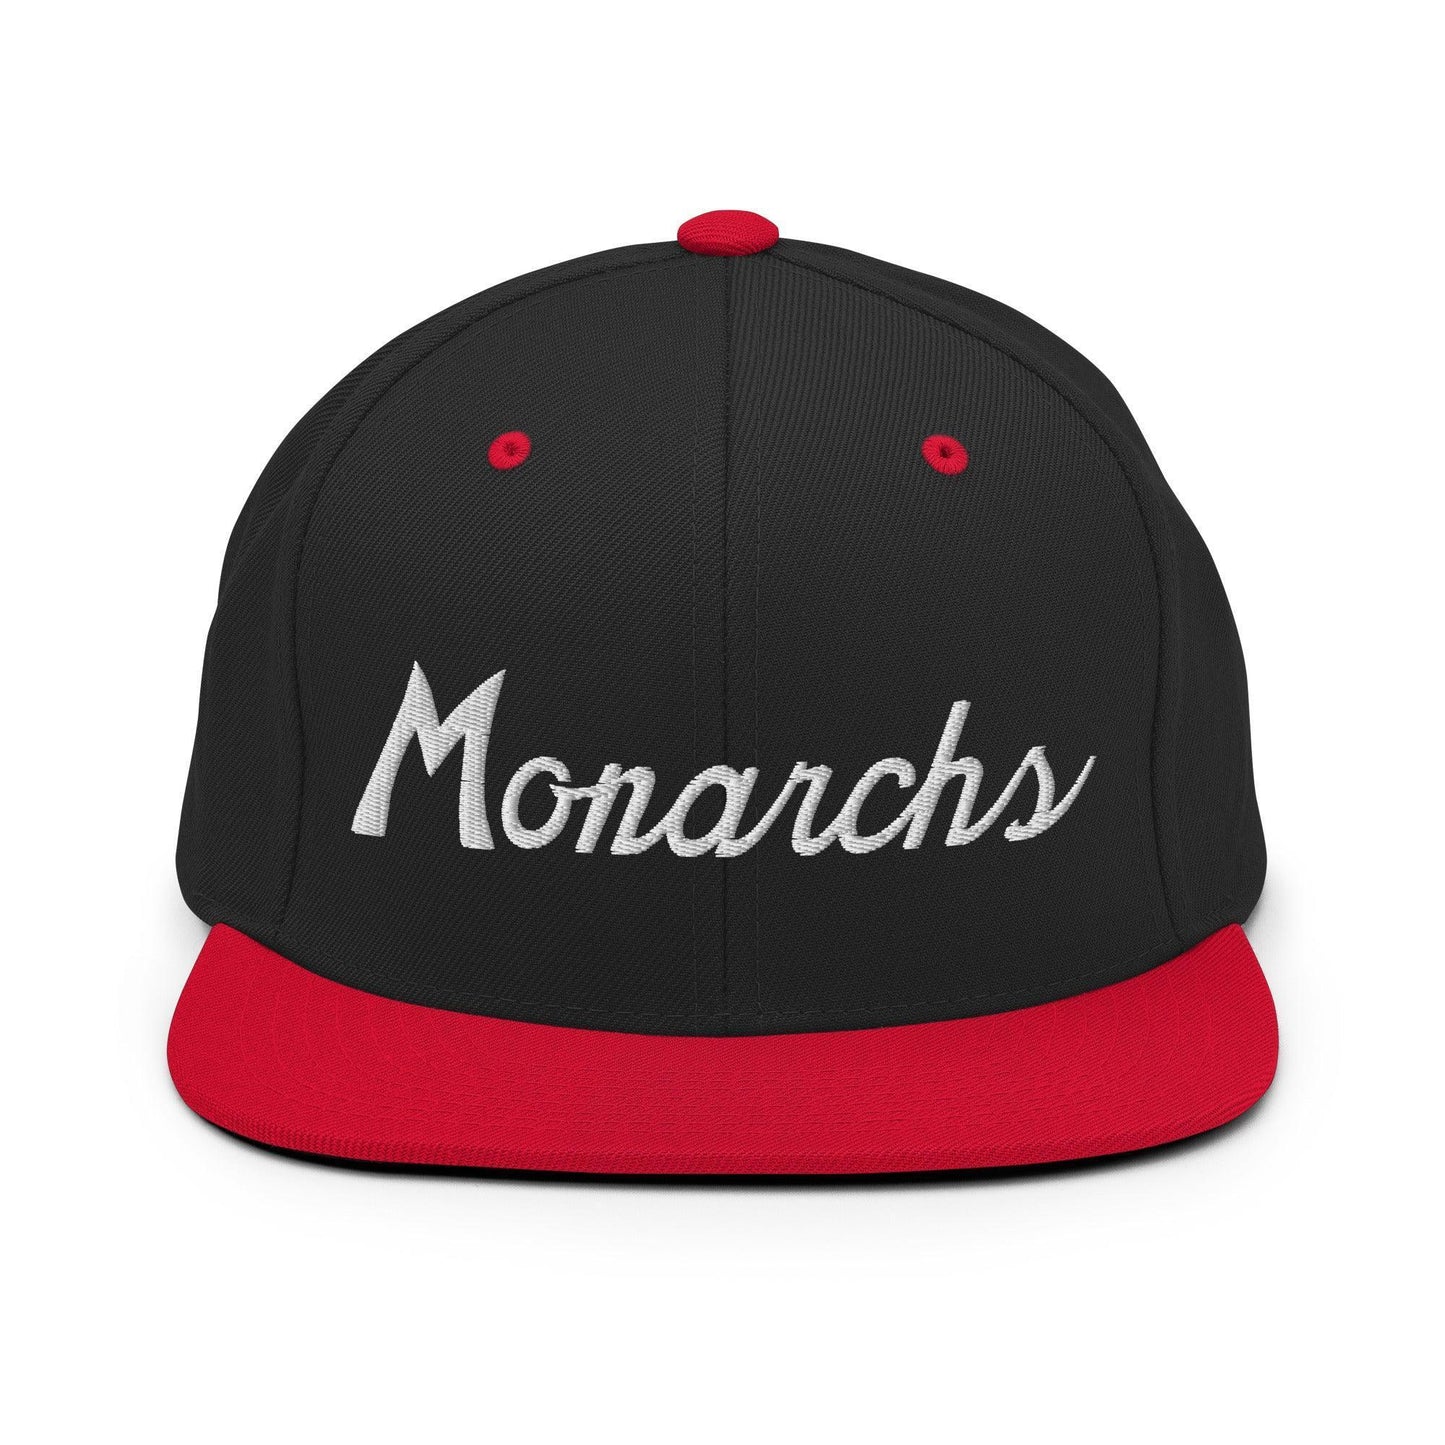 Monarchs School Mascot Script Snapback Hat Black Red